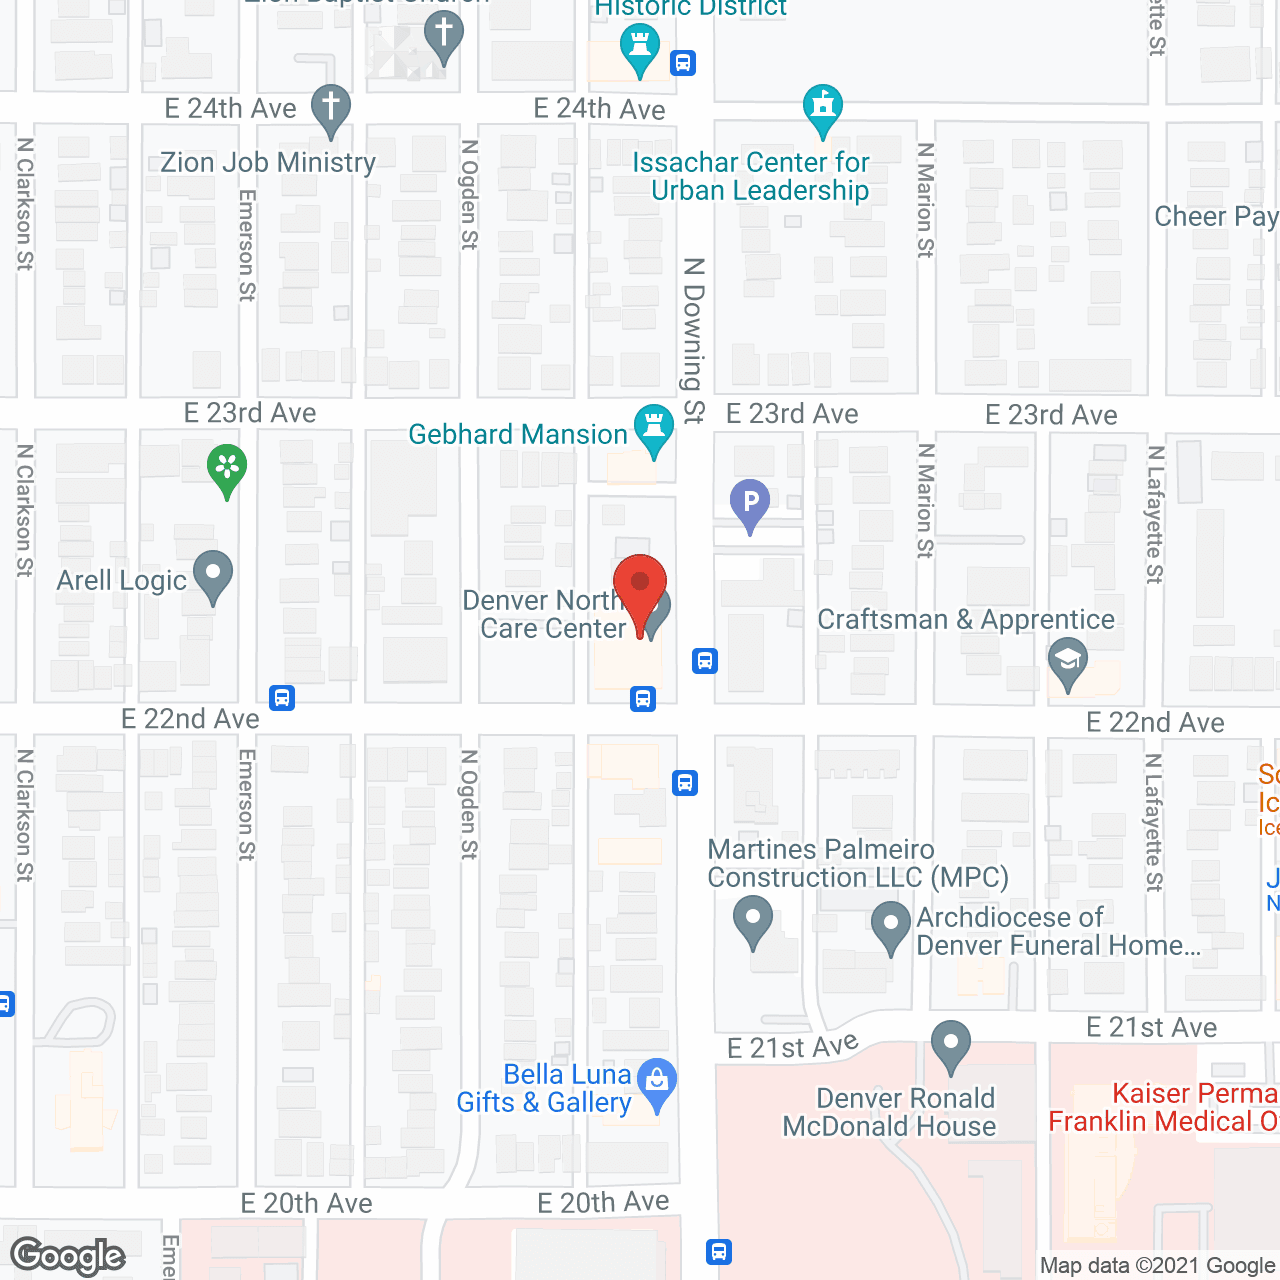 Denver North Care Center in google map